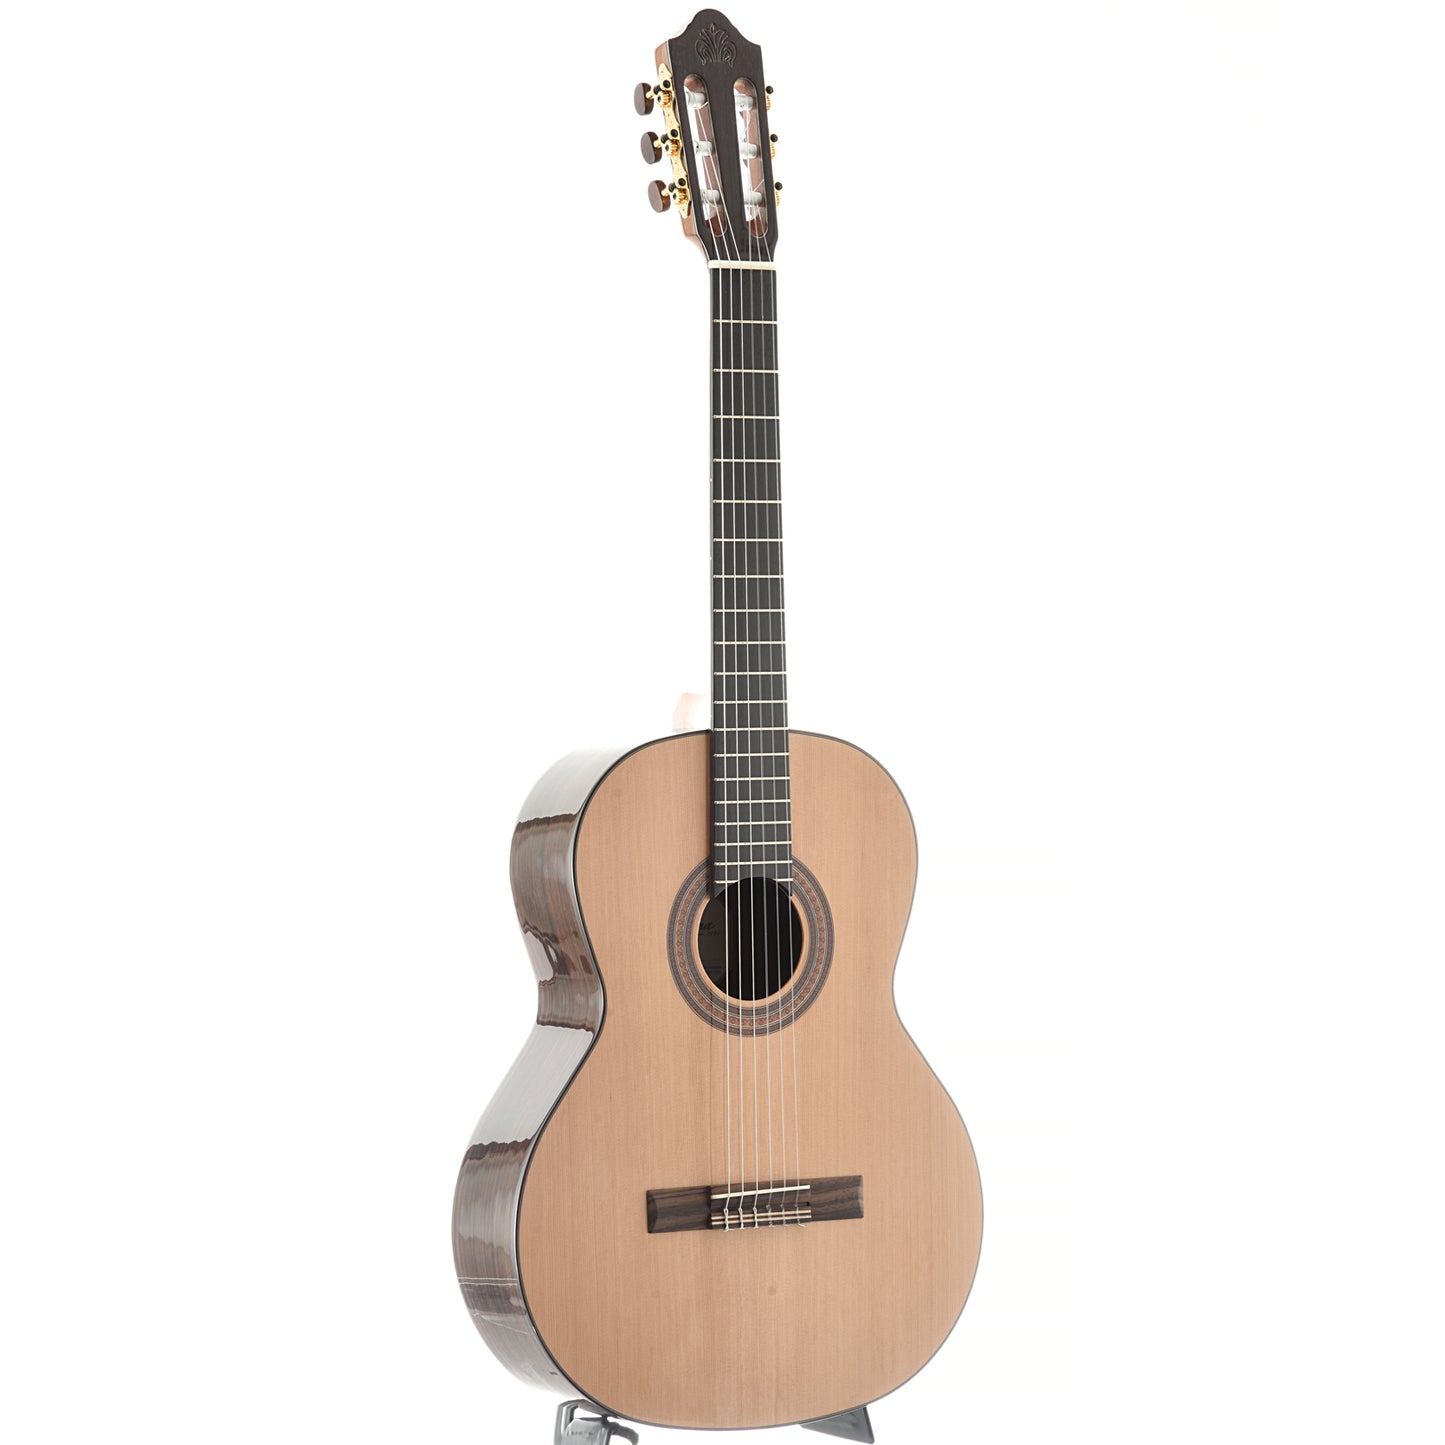 Image 2 of Kremona Fiesta FC Classical Guitar and Case - SKU# KFFC : Product Type Classical & Flamenco Guitars : Elderly Instruments